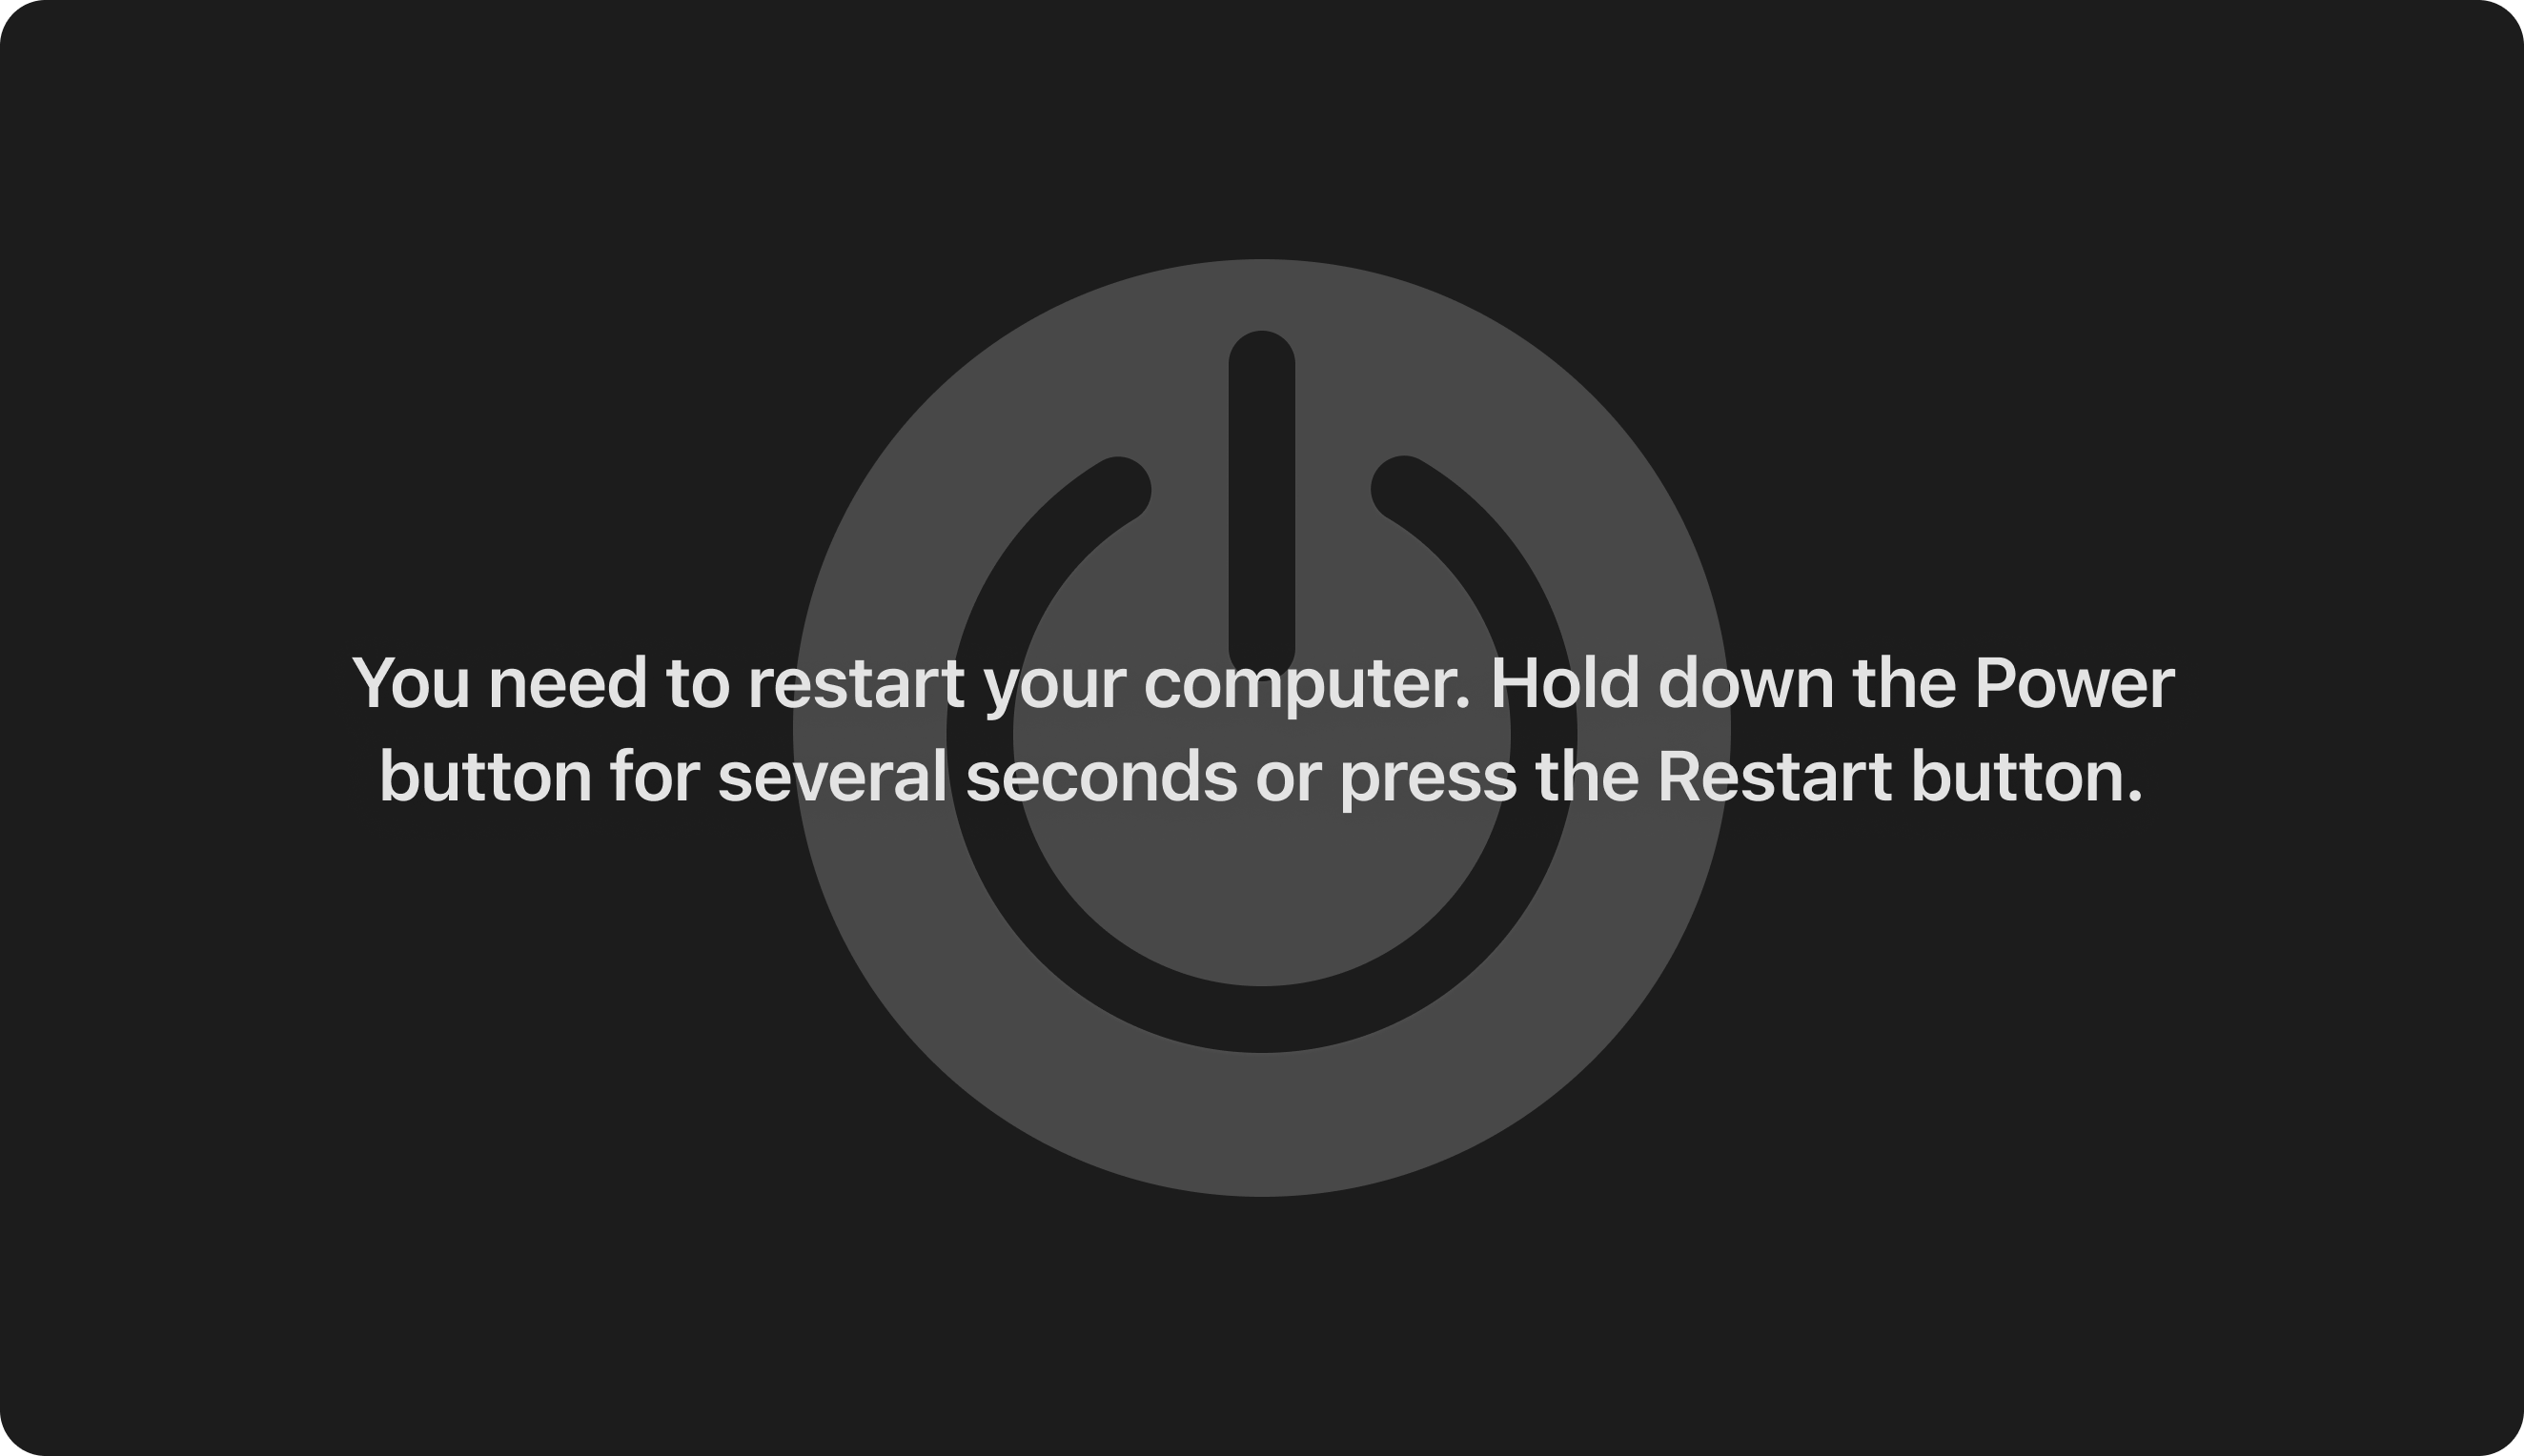 kernel panic message on Mac screen